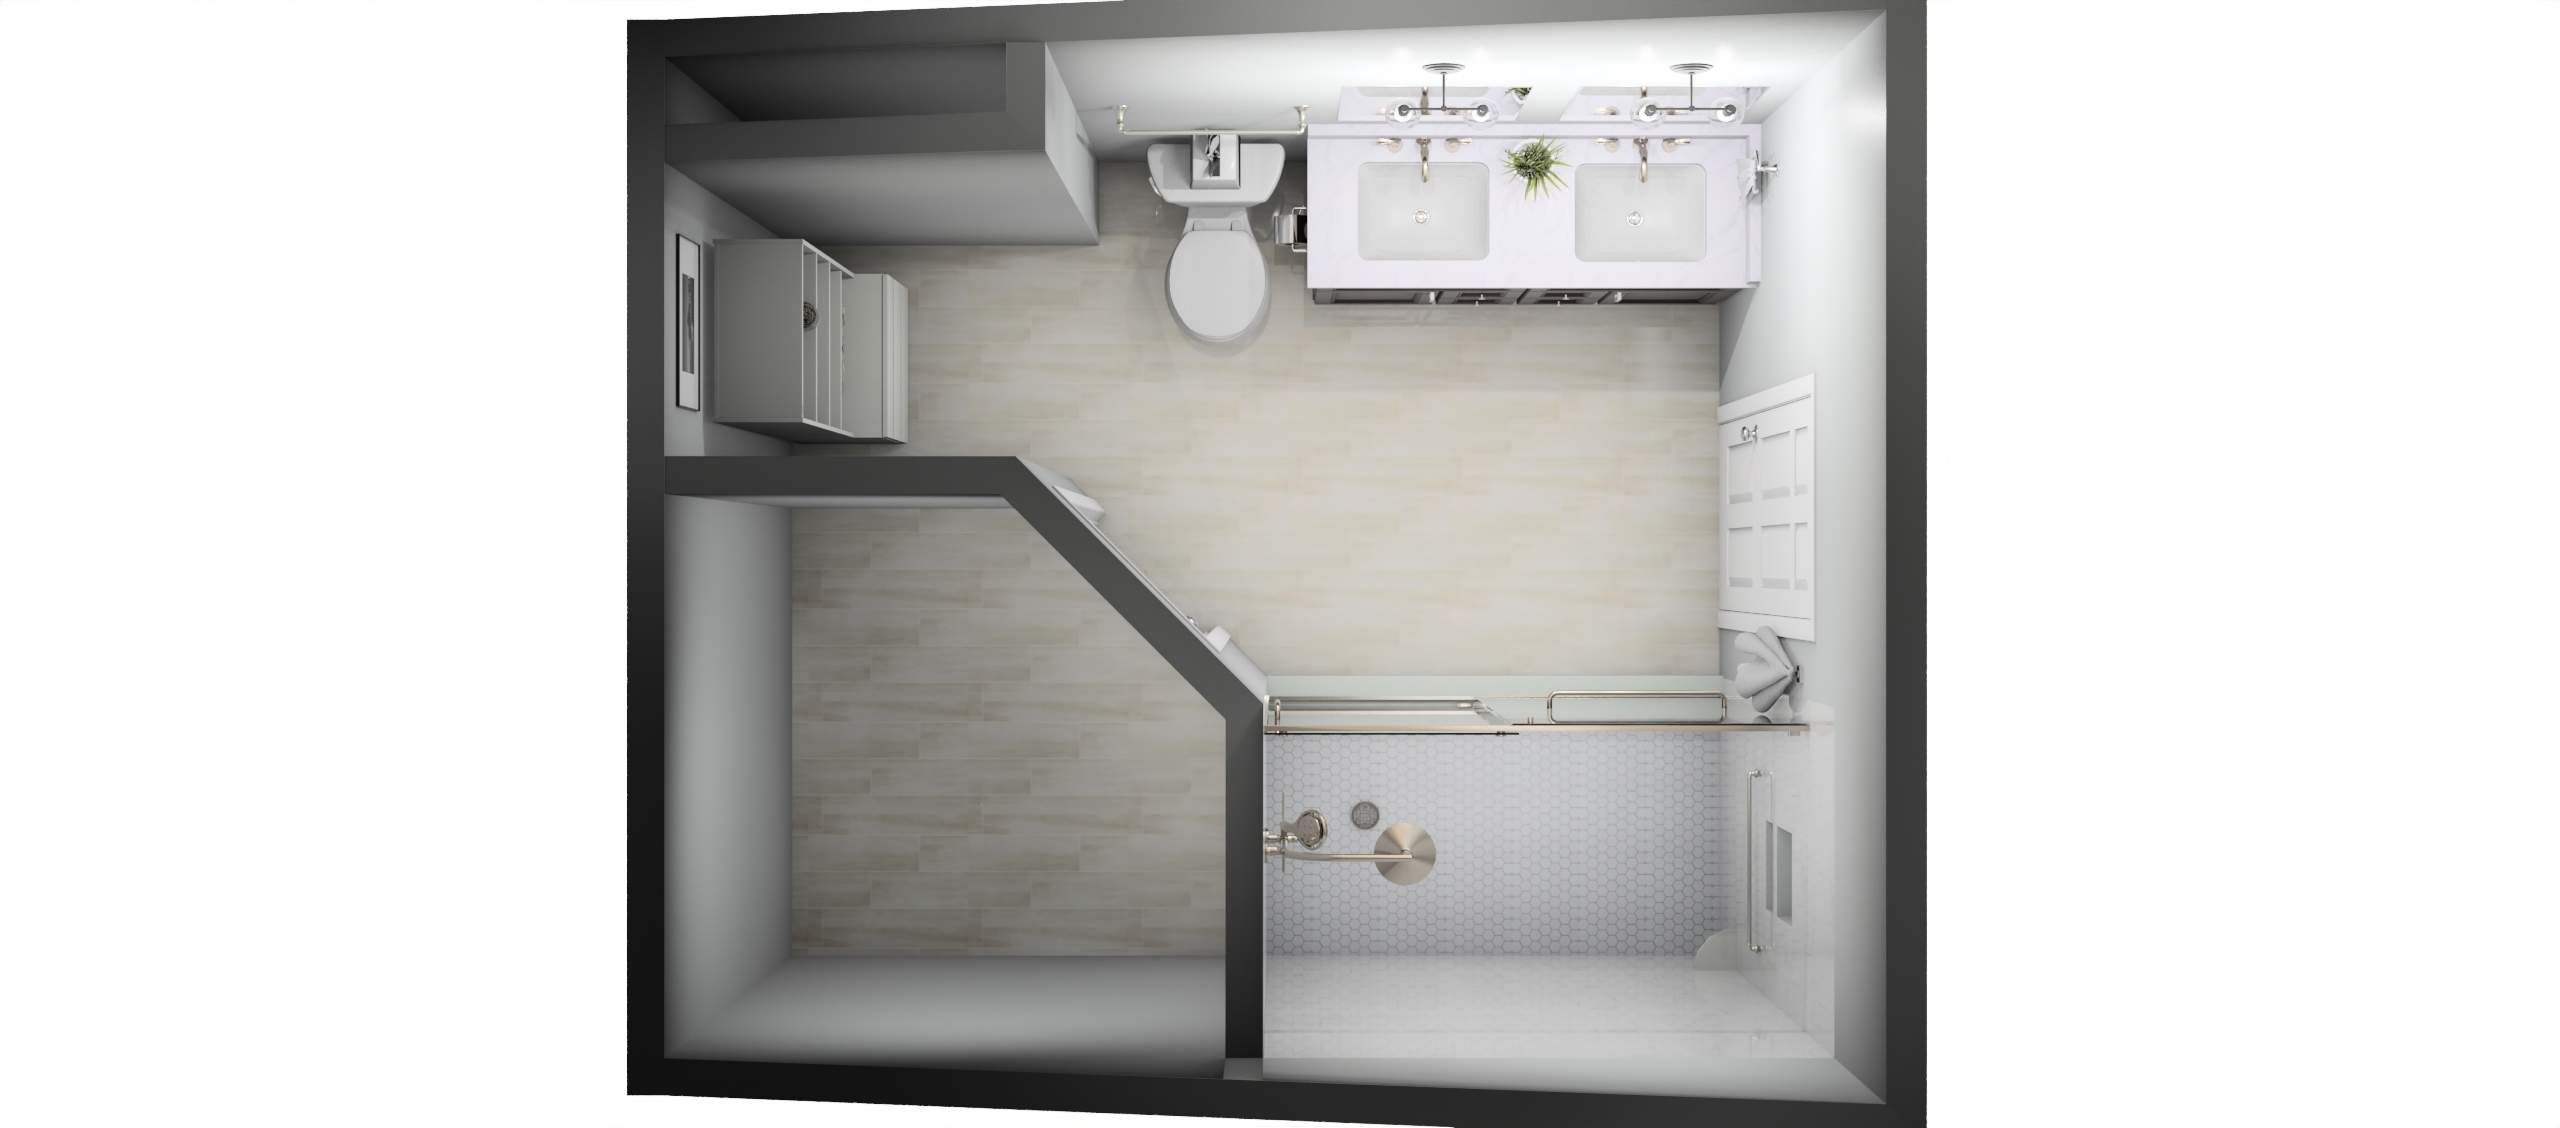 bathroom remodel dave kolenc 4 - Keselman Construction Group Inc